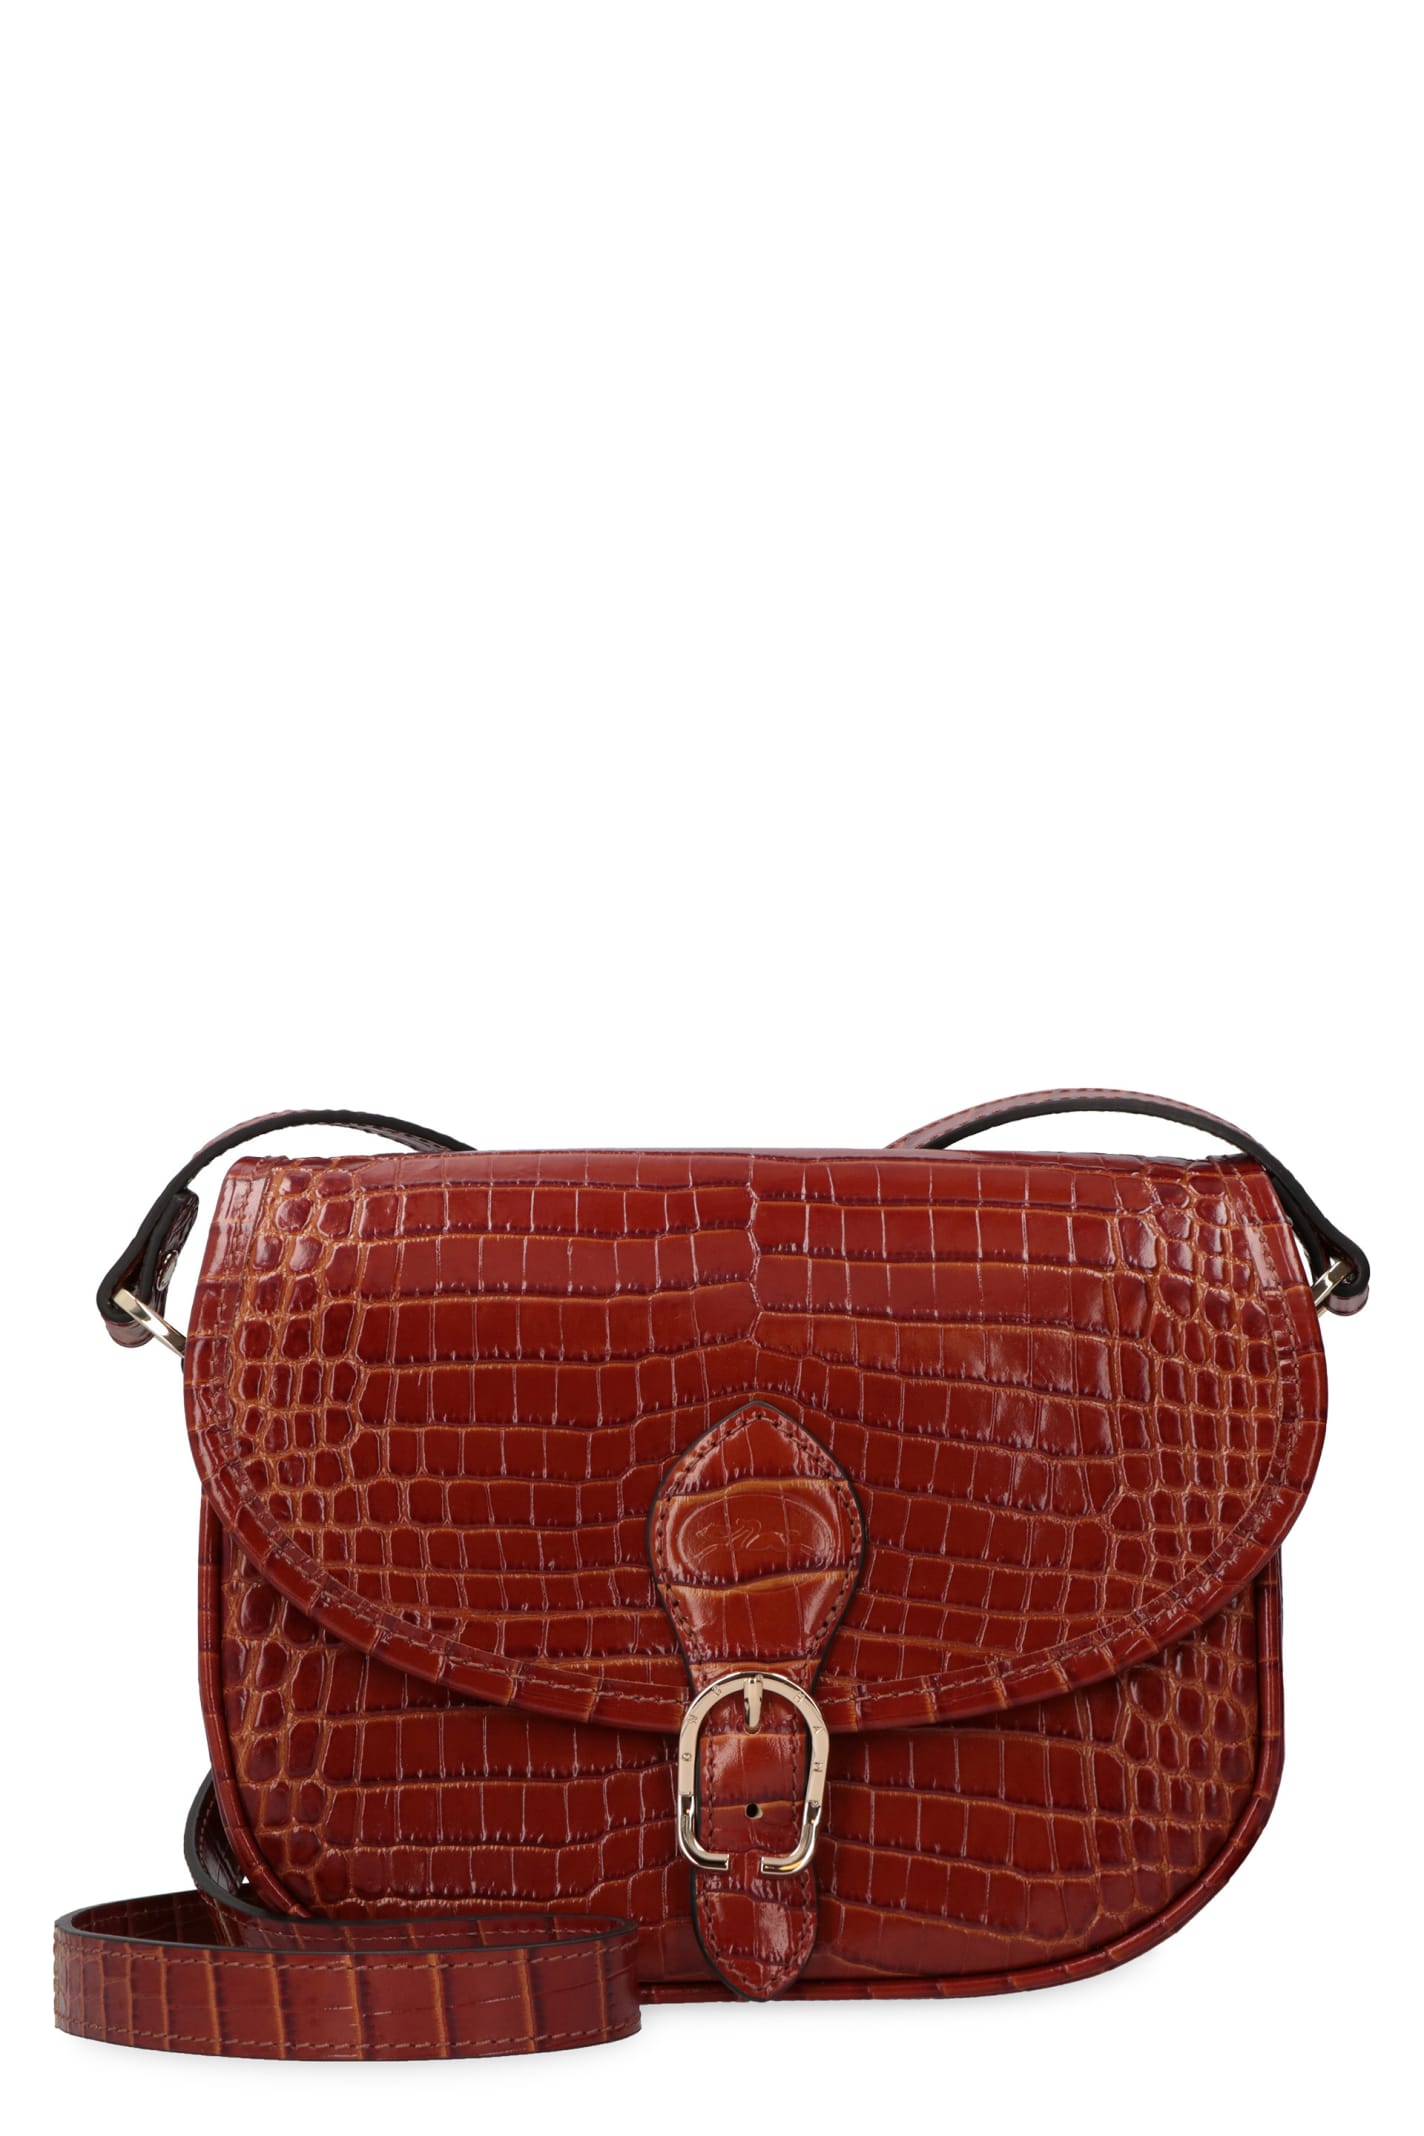 Longchamp Printed Leather Crossbody Bag